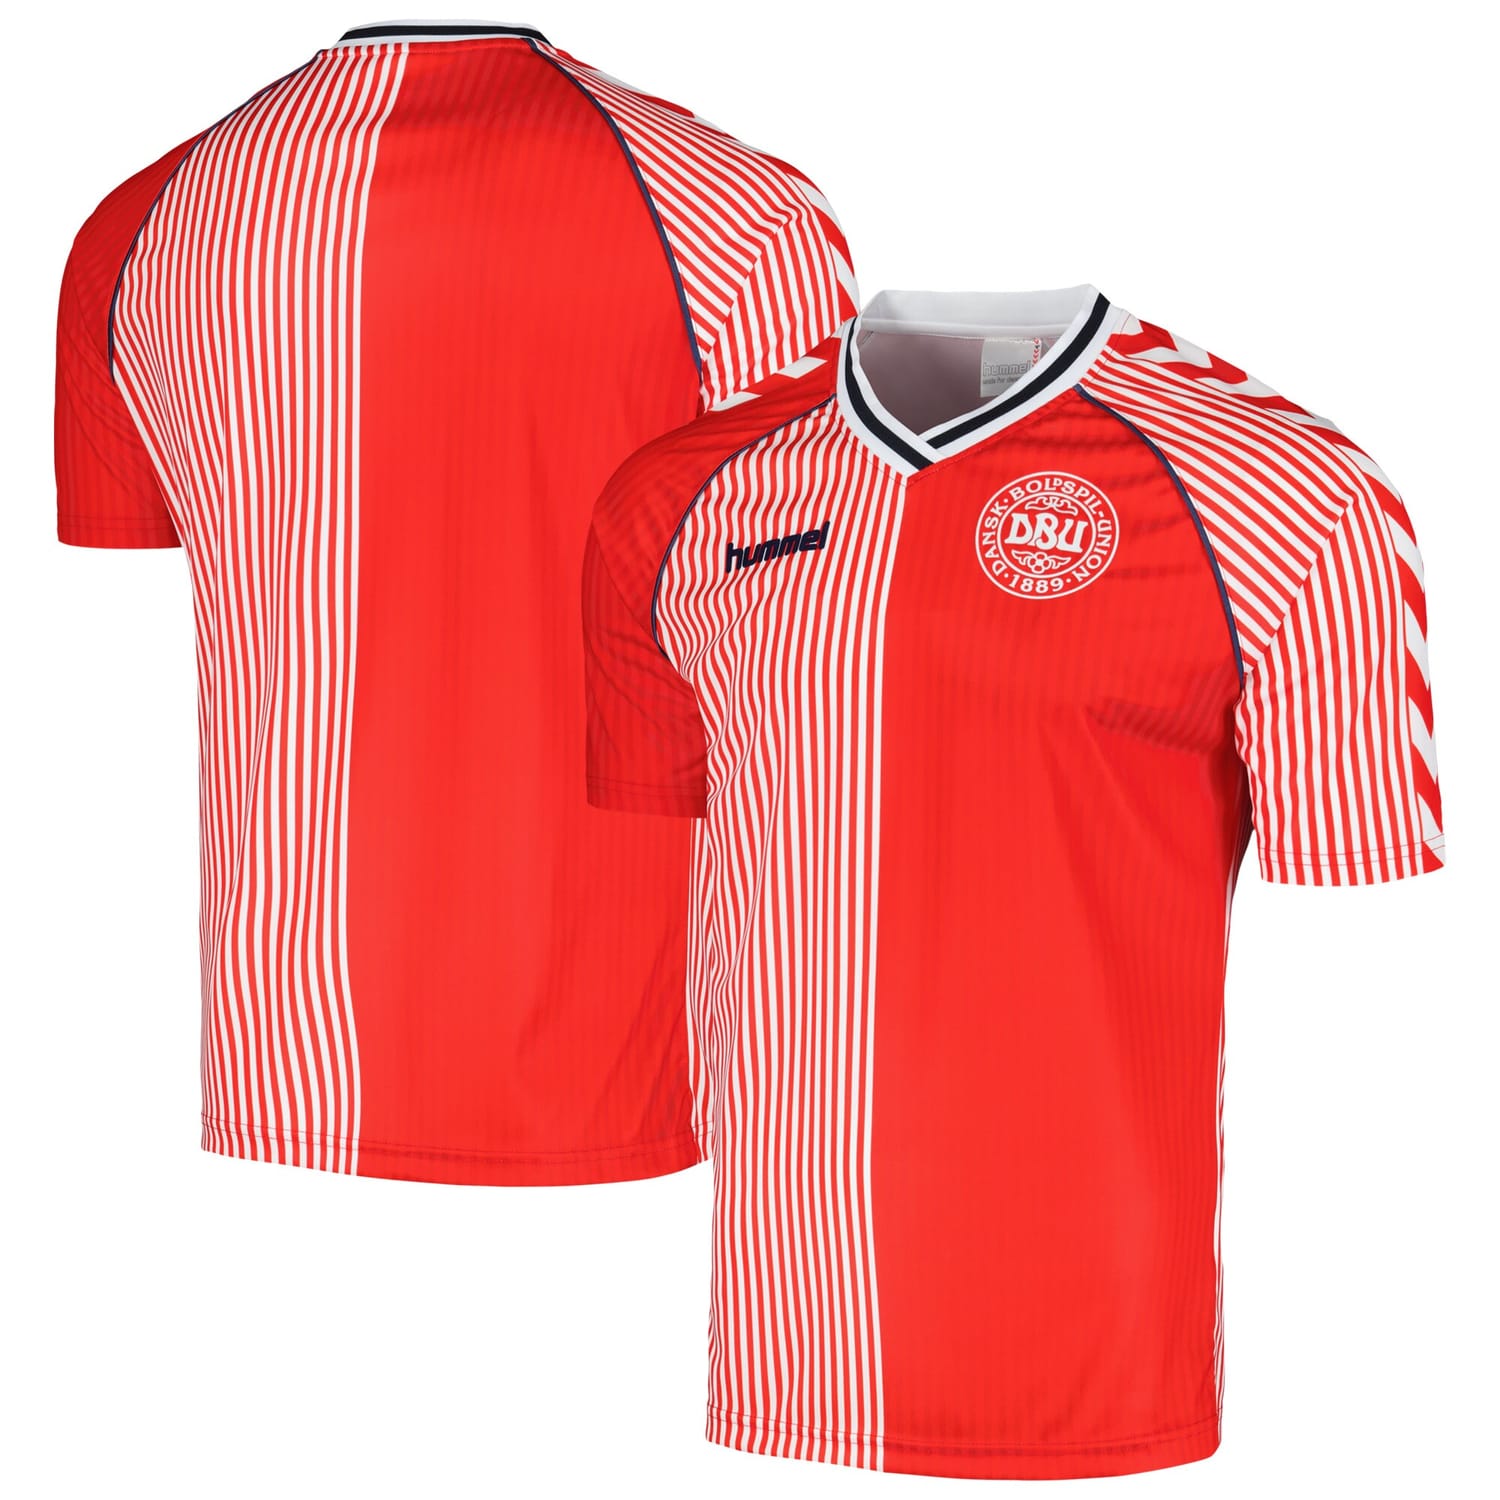 Denmark National Team Home Jersey Shirt Red 1986 for Men